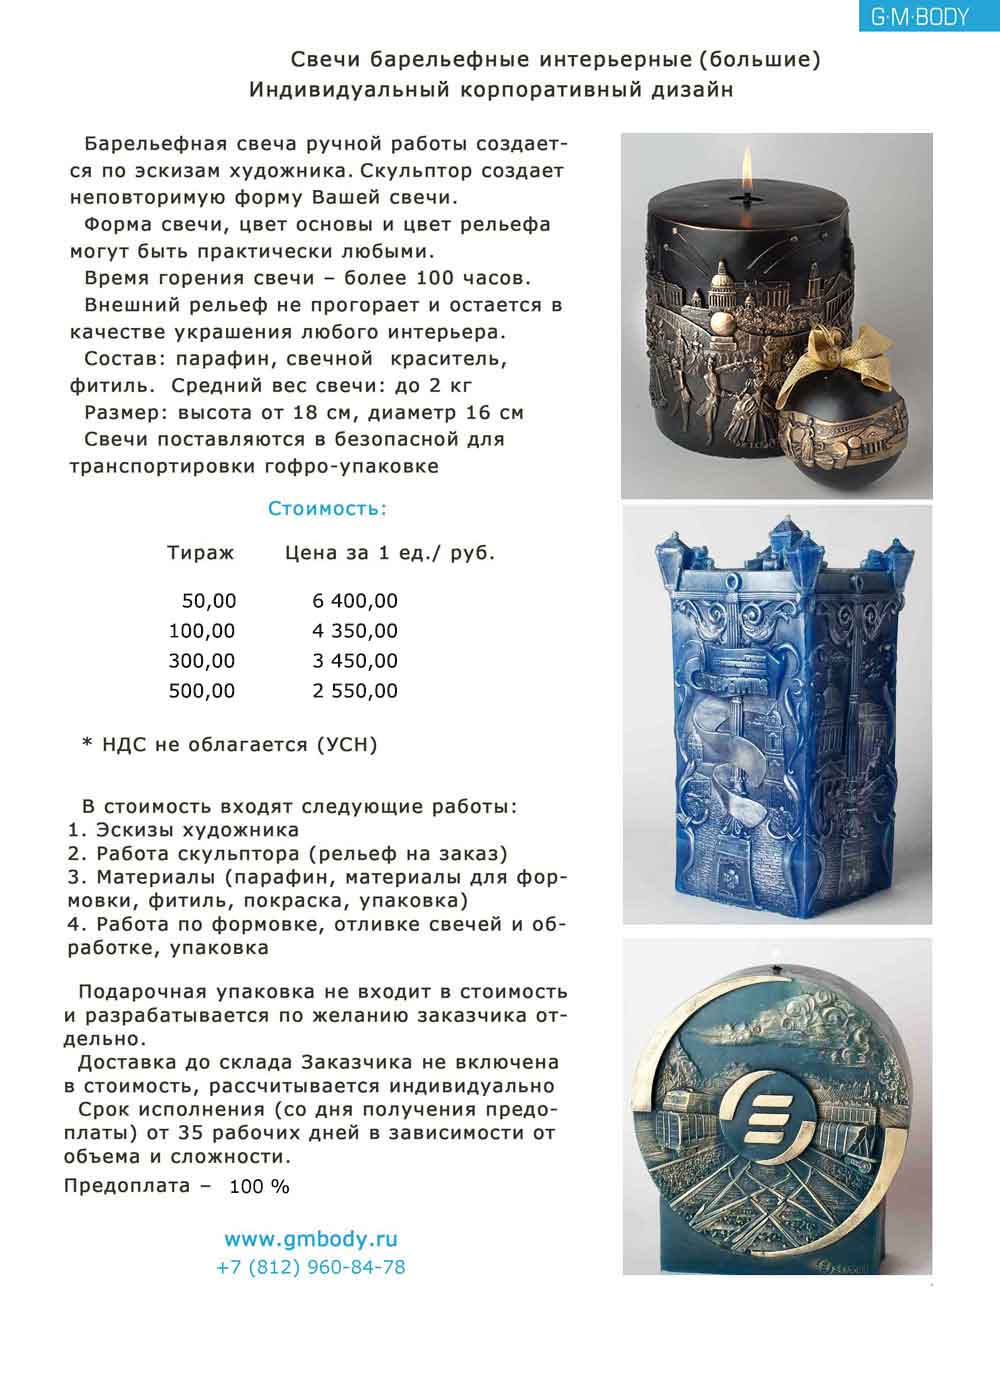 svechibolshie-price-2015